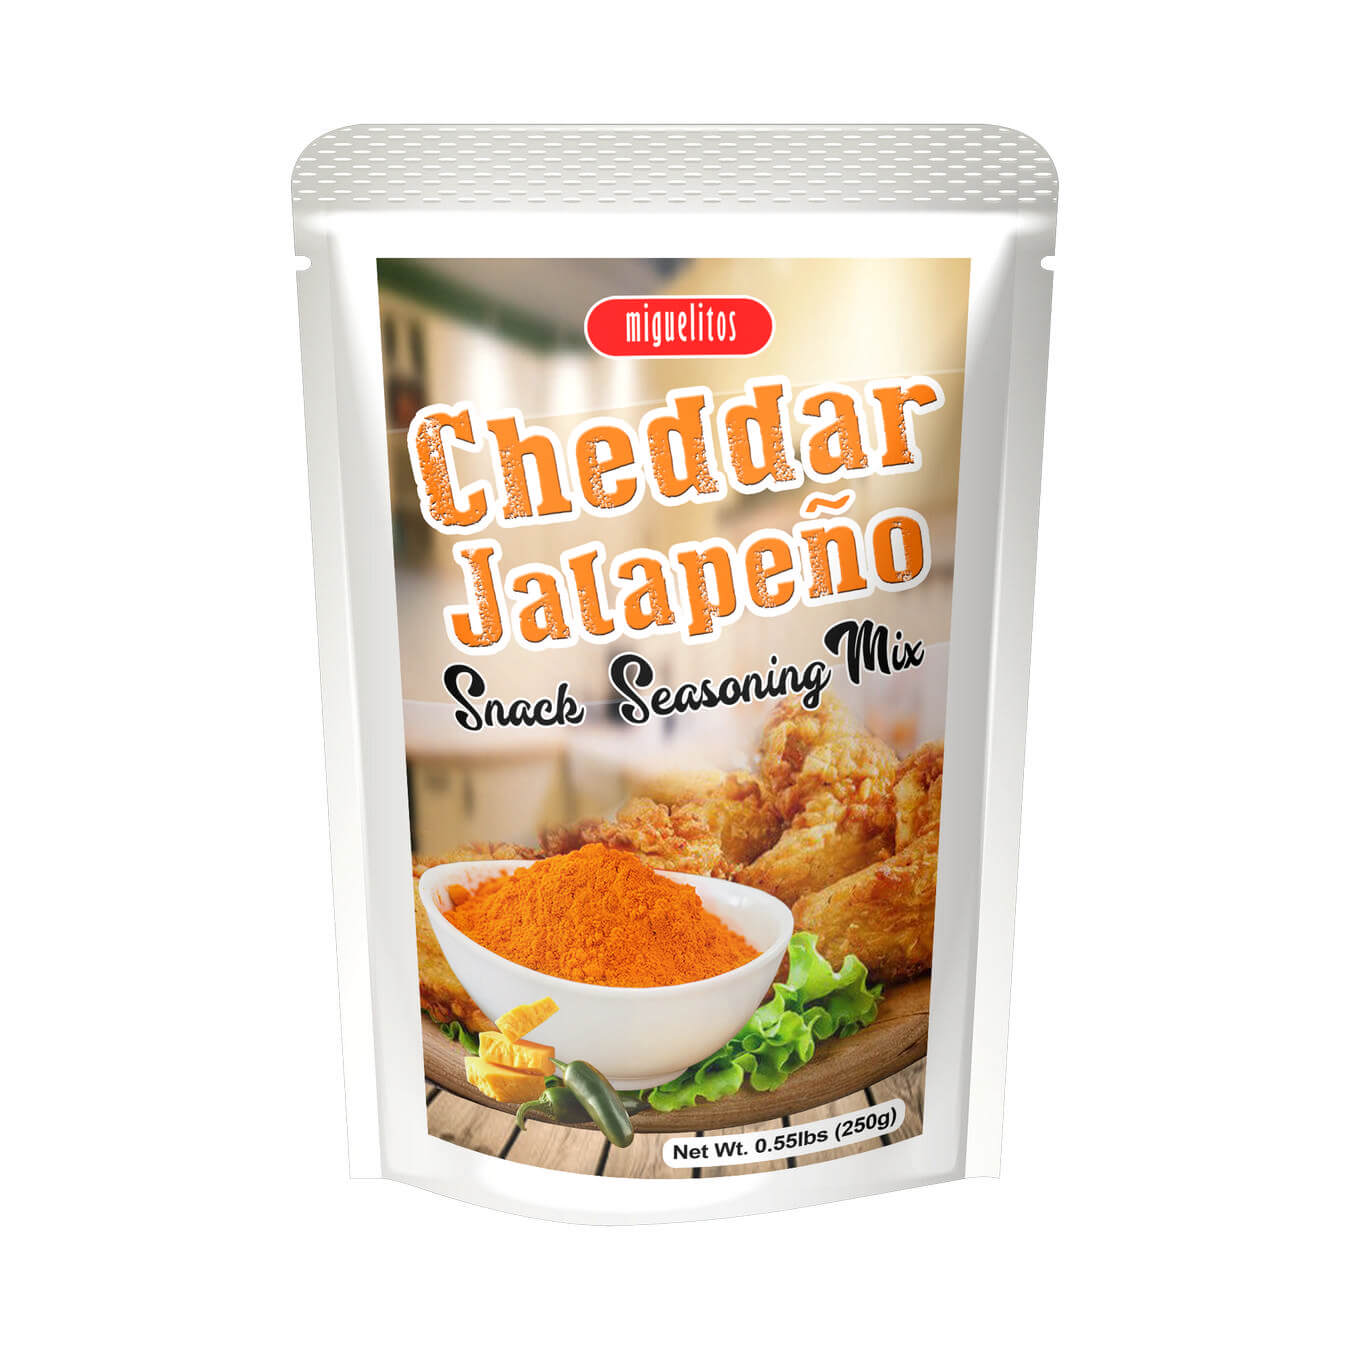 Cheddar Jalapeno Seasoning